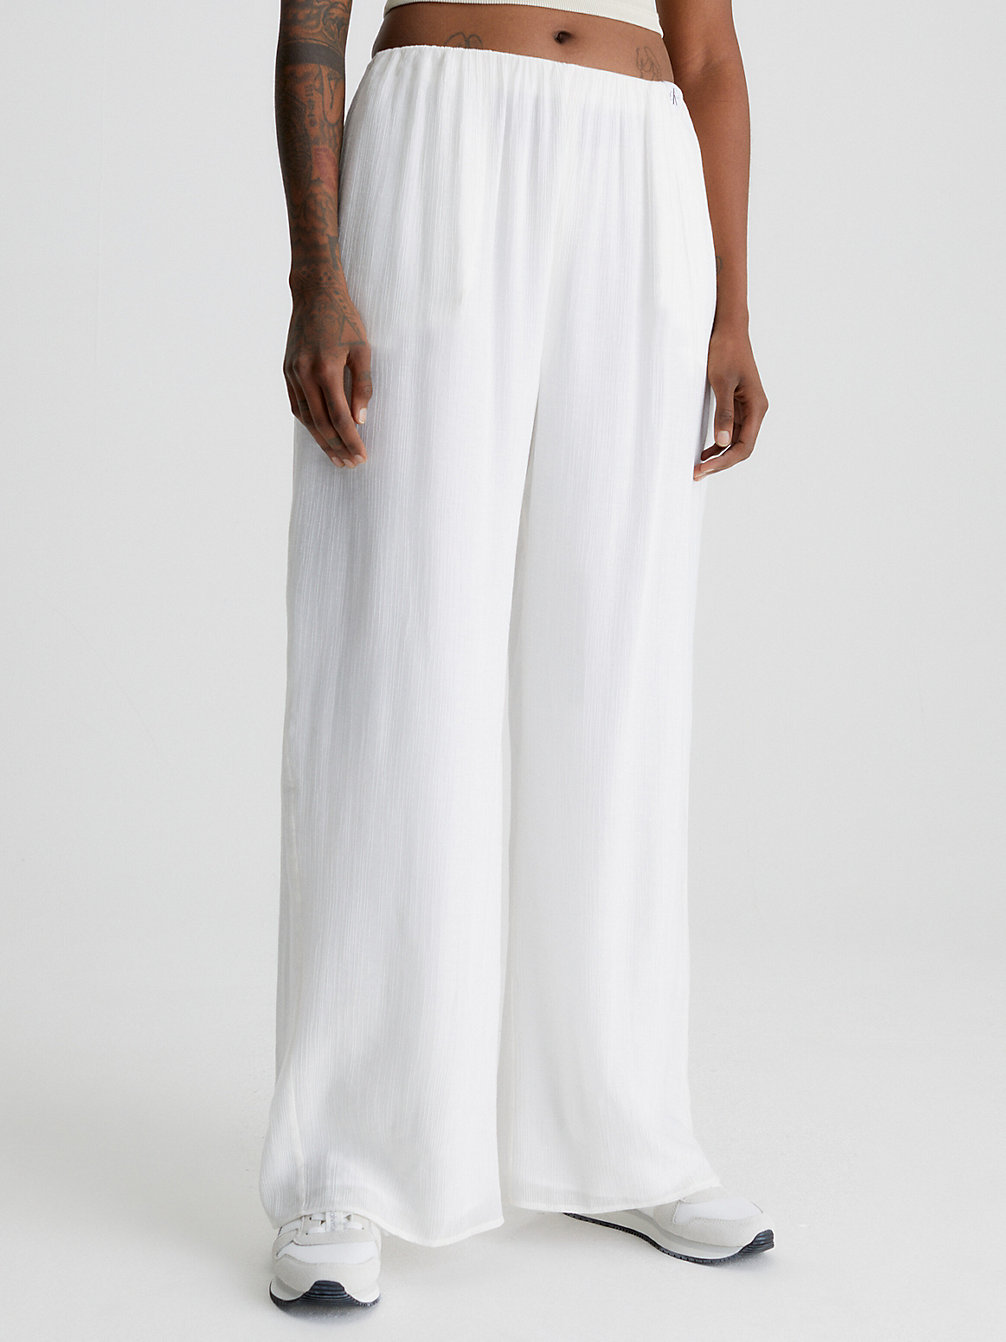 Pantaloni Gamba Ampia In Rayon Increspato > ANCIENT WHITE > undefined donna > Calvin Klein